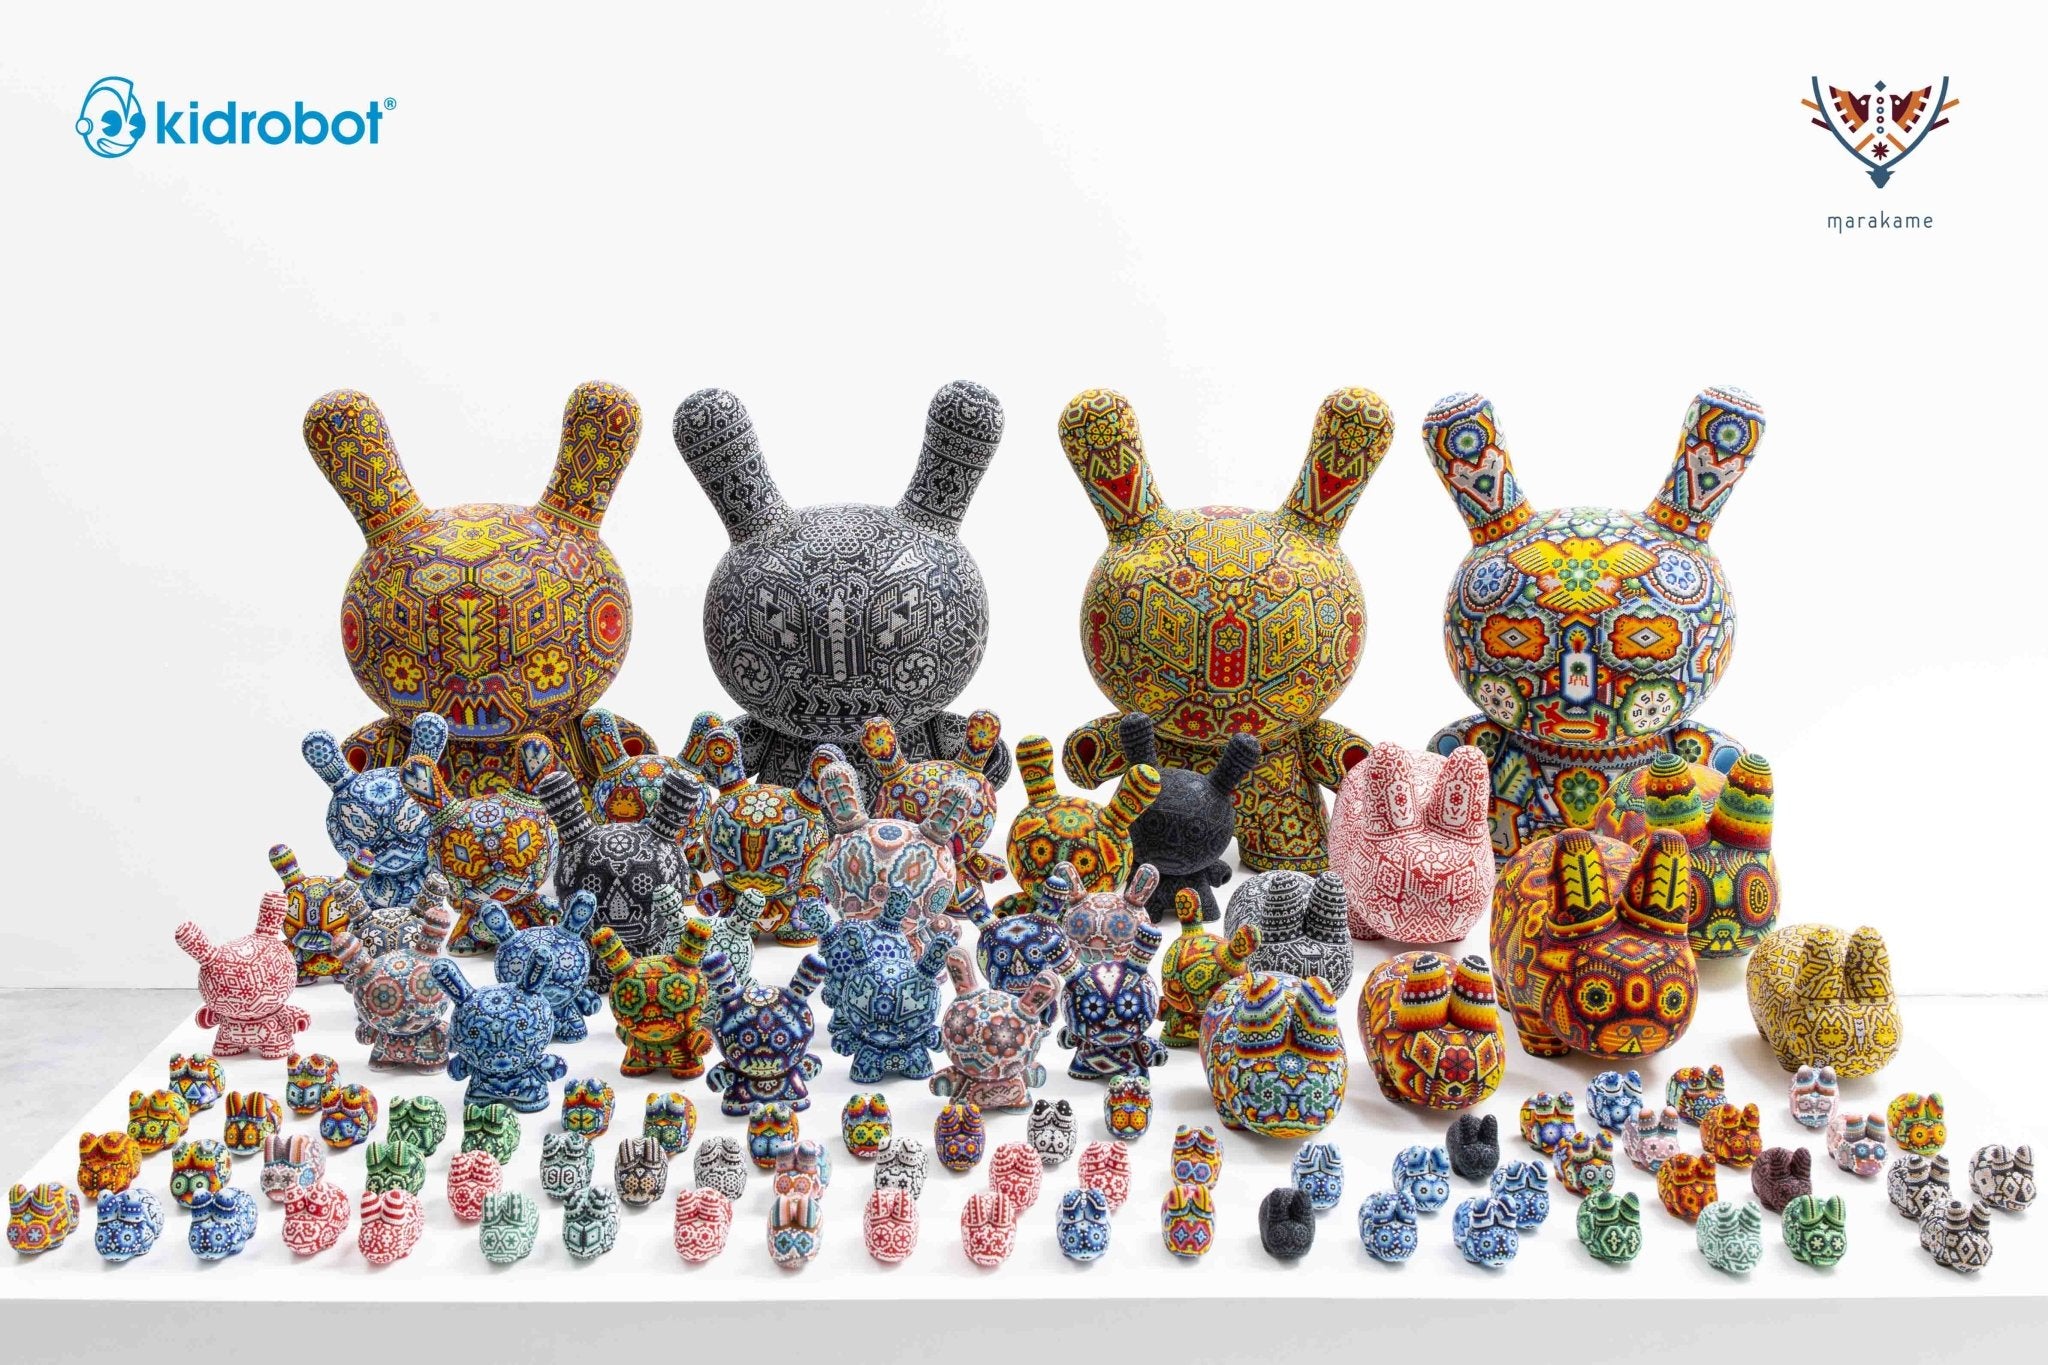 KidRobot – Munny, Dunny & Labbit editions - Huichol Art - Marakame